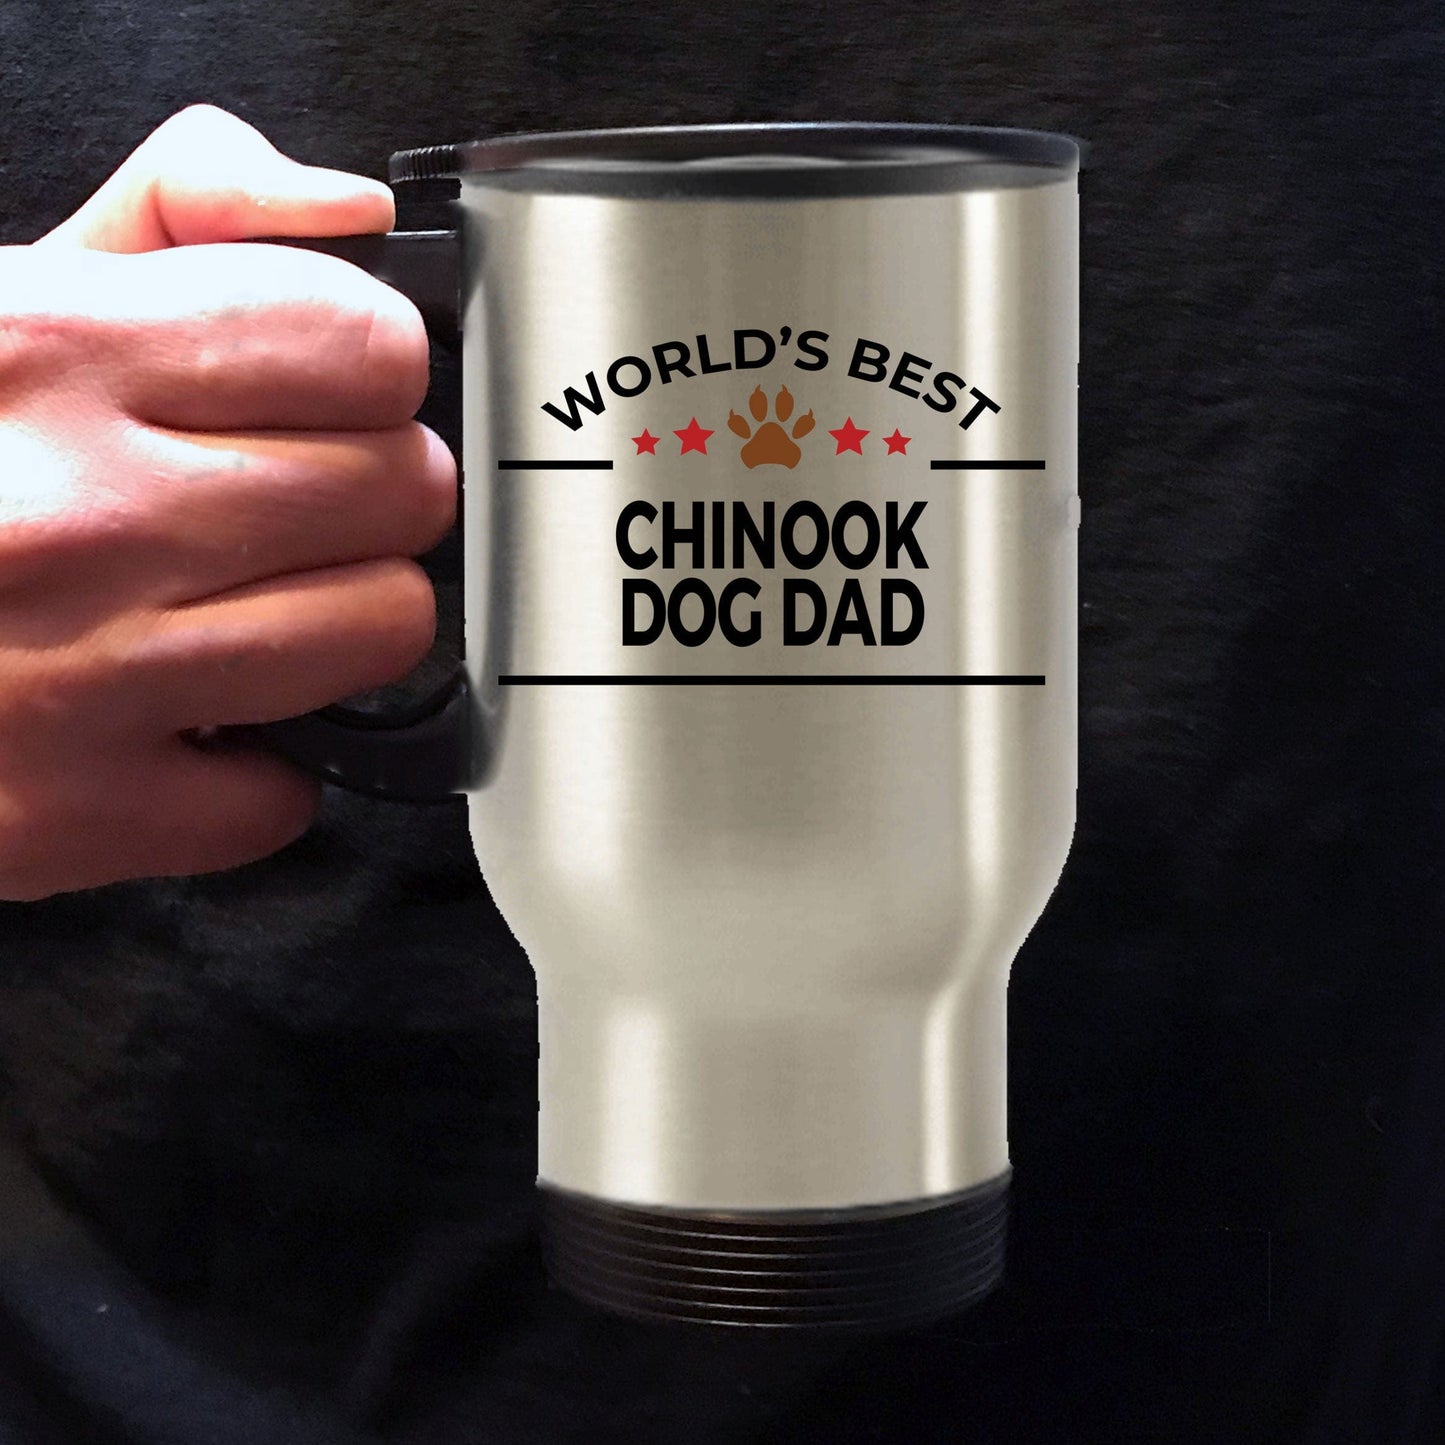 Chinook Dog Dad Travel Coffee Mug